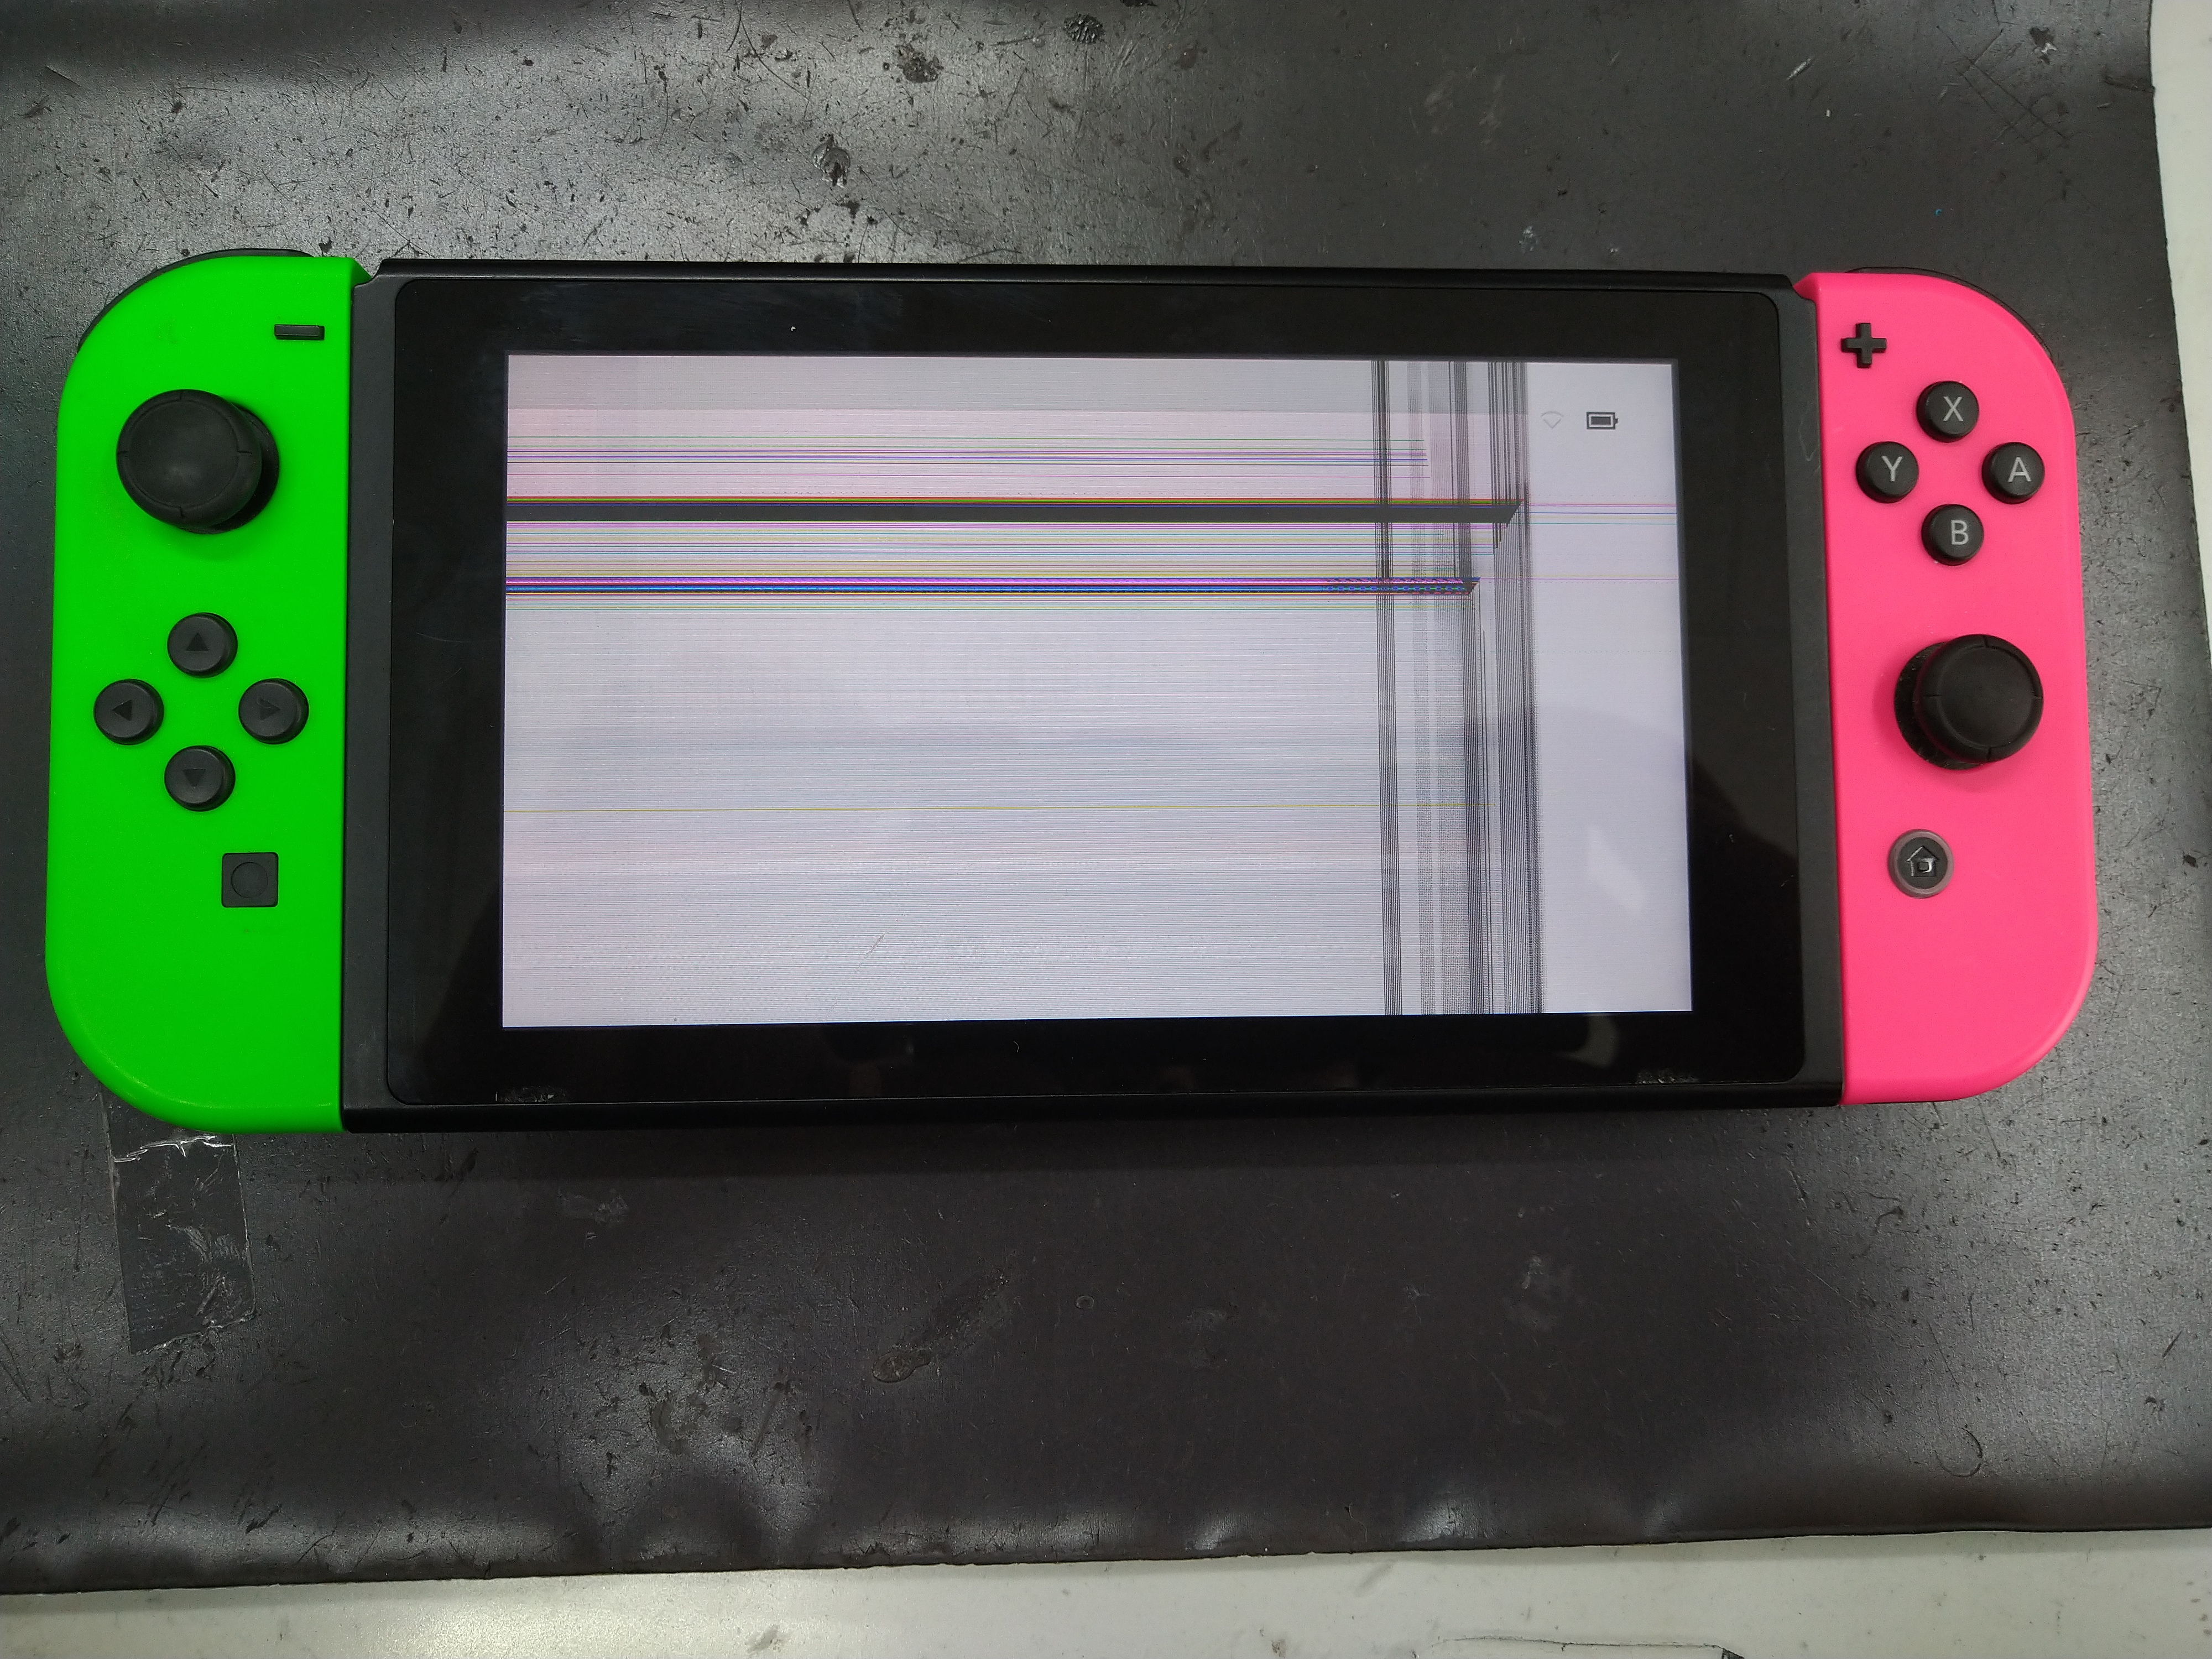 Nintendo switchの画面が変色したり縦線が出ている場合は液晶交換が